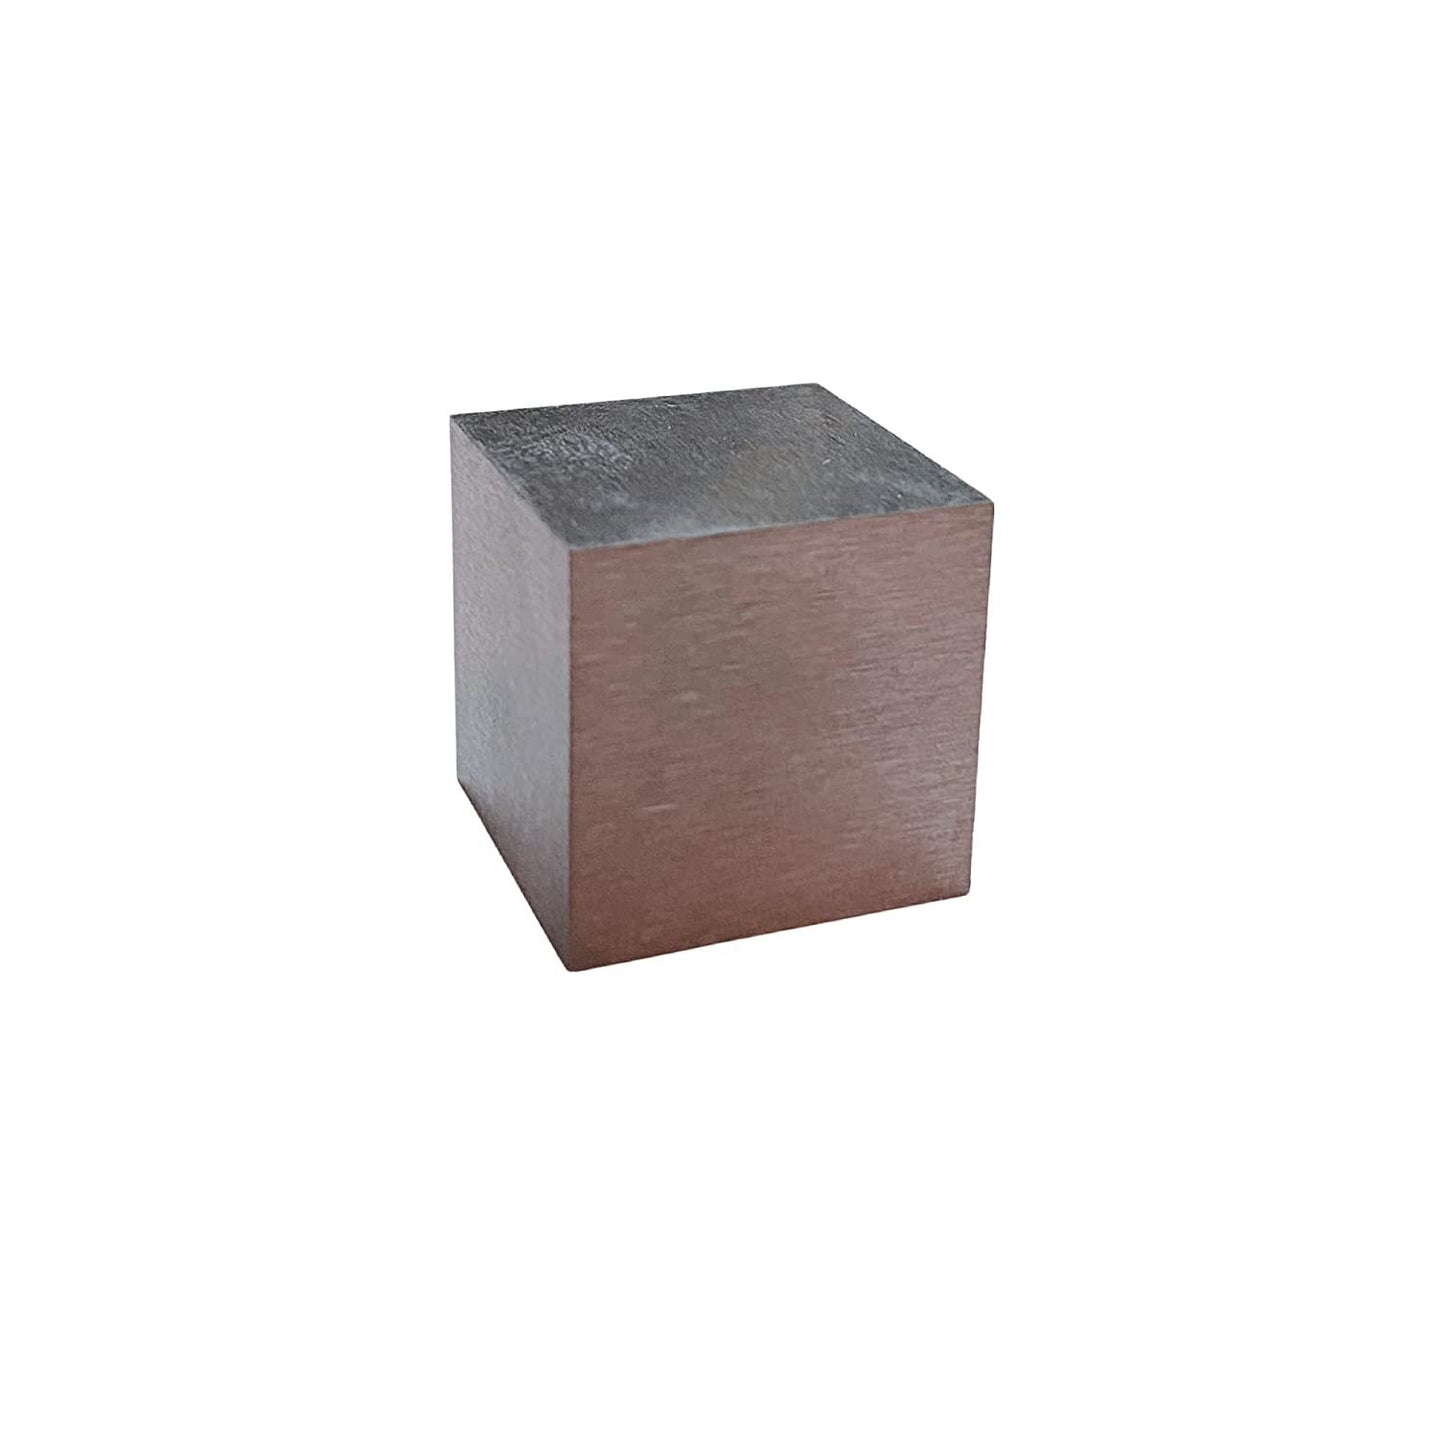 1'' Tungsten Solid Cube Block Carbide Ingot Pure Element W 74 Aerospace Grade Paperweight Electrode